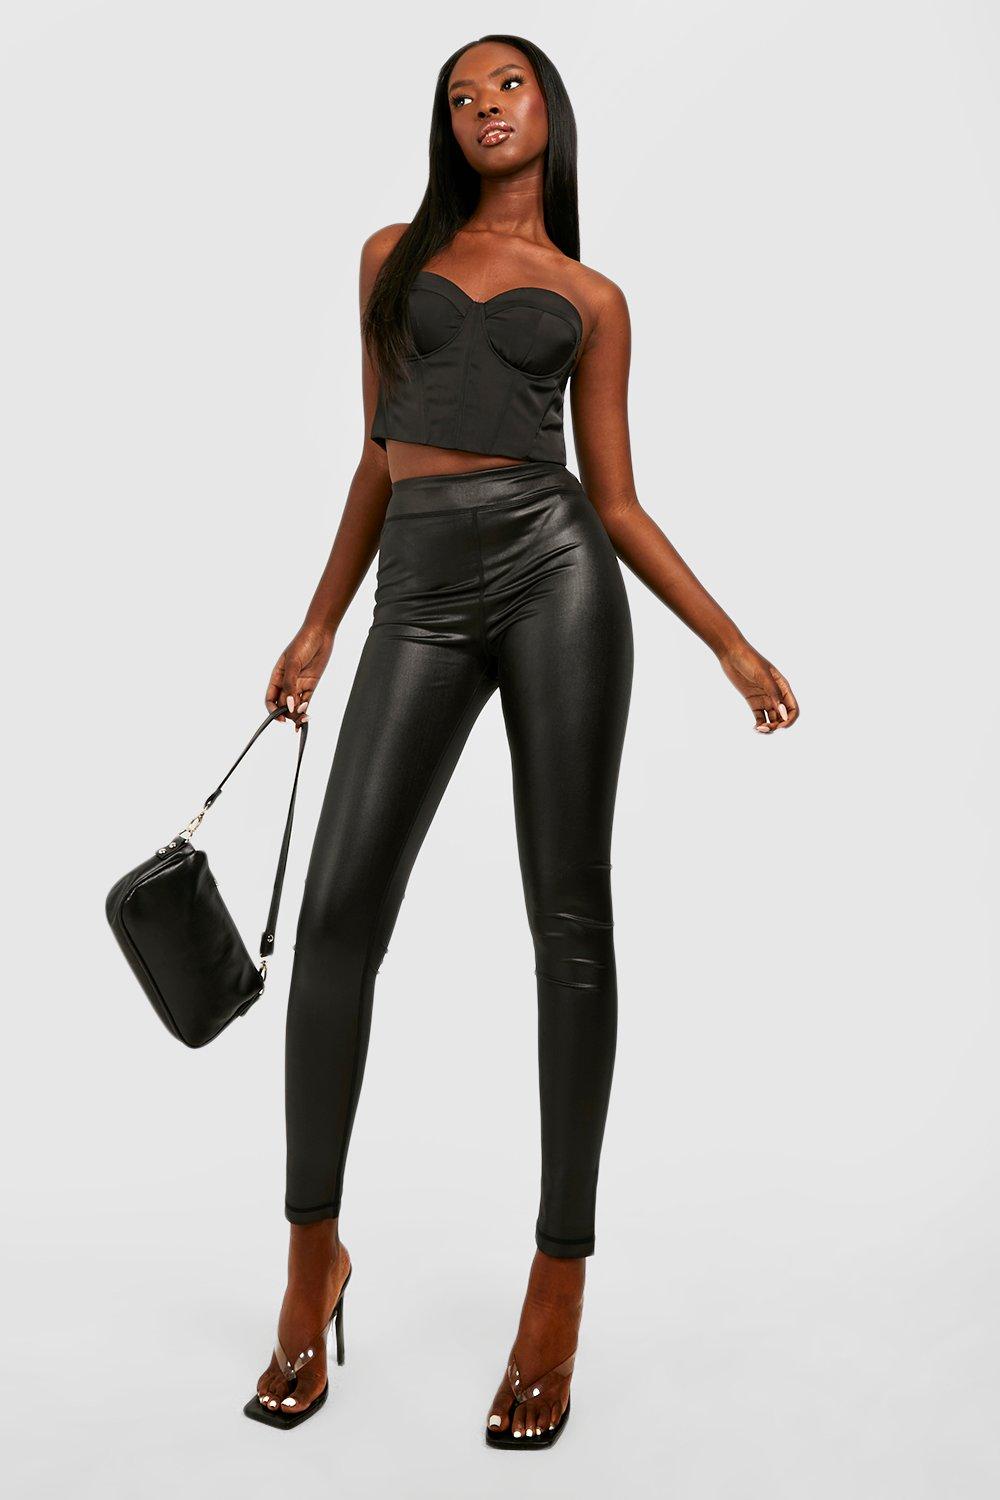 https://media.boohoo.com/i/boohoo/gzz34922_black_xl_2/female-black-basic-wet-look-leggings